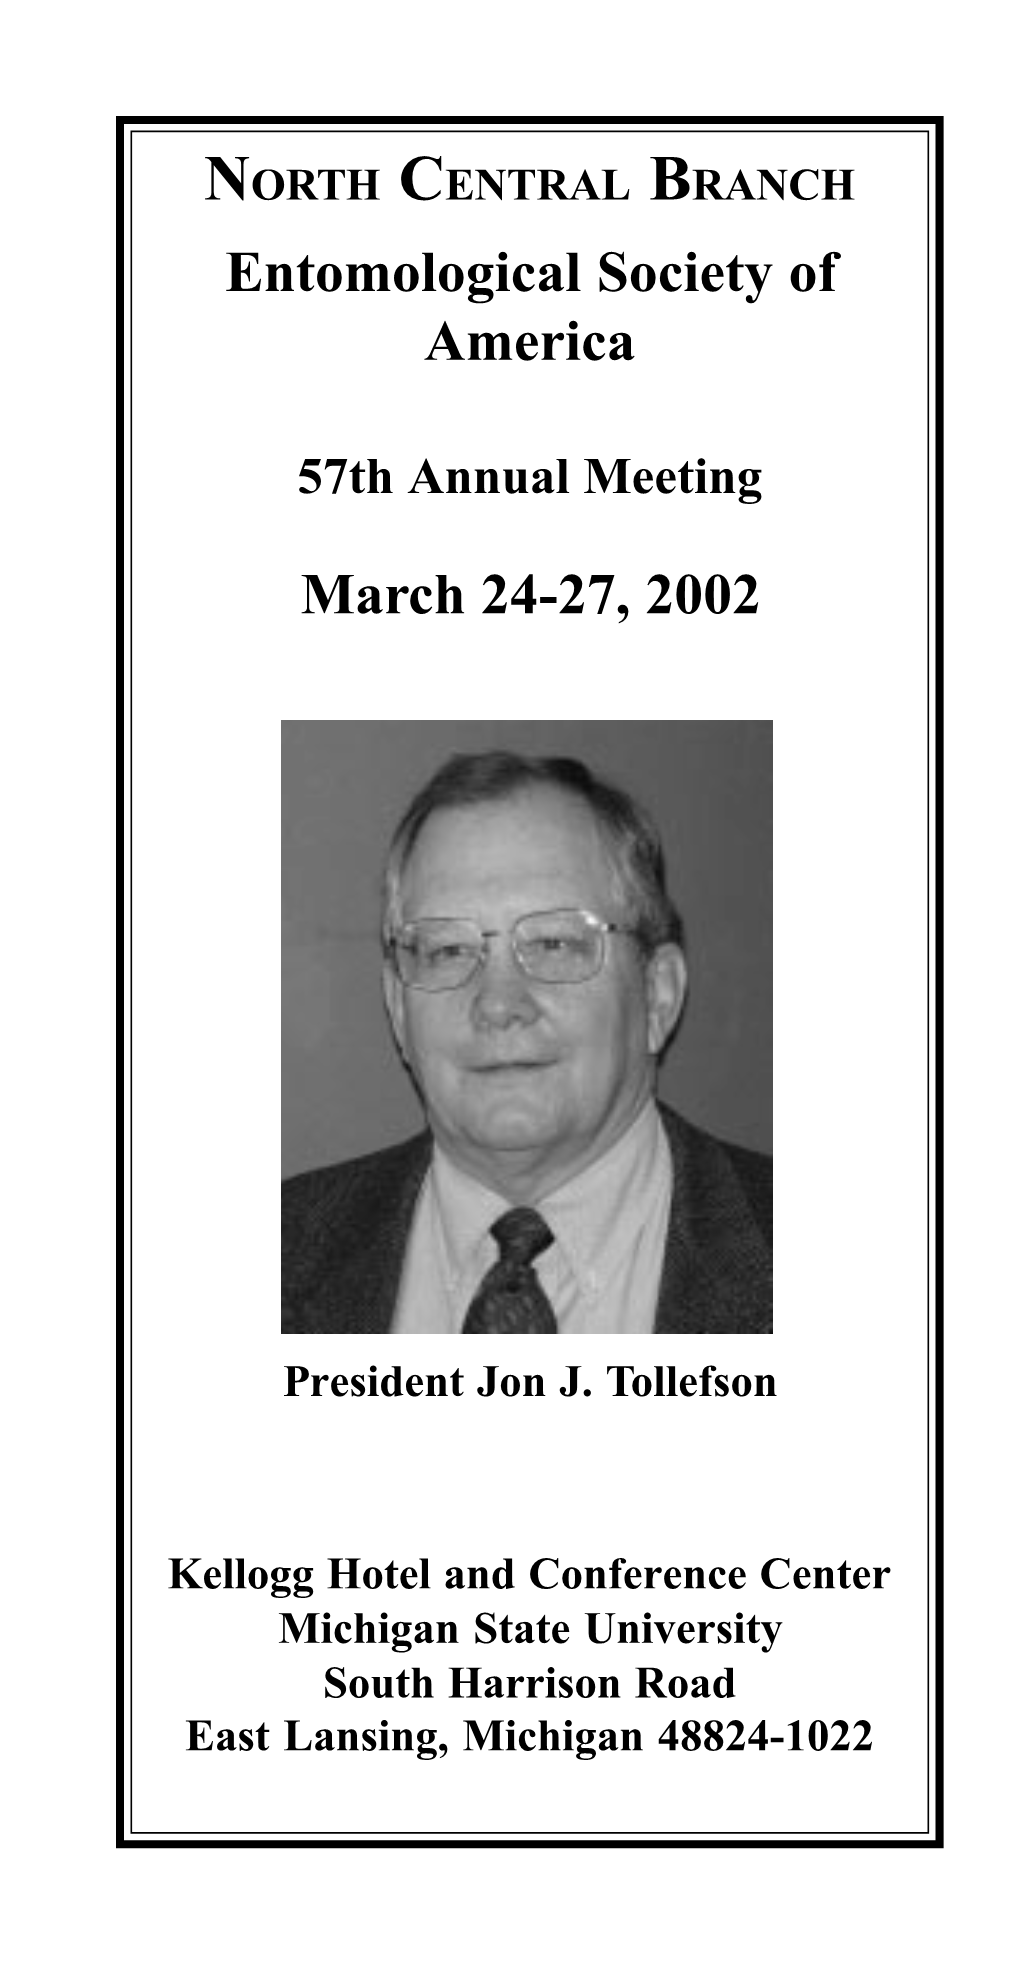 Entomological Society of America March 24-27, 2002